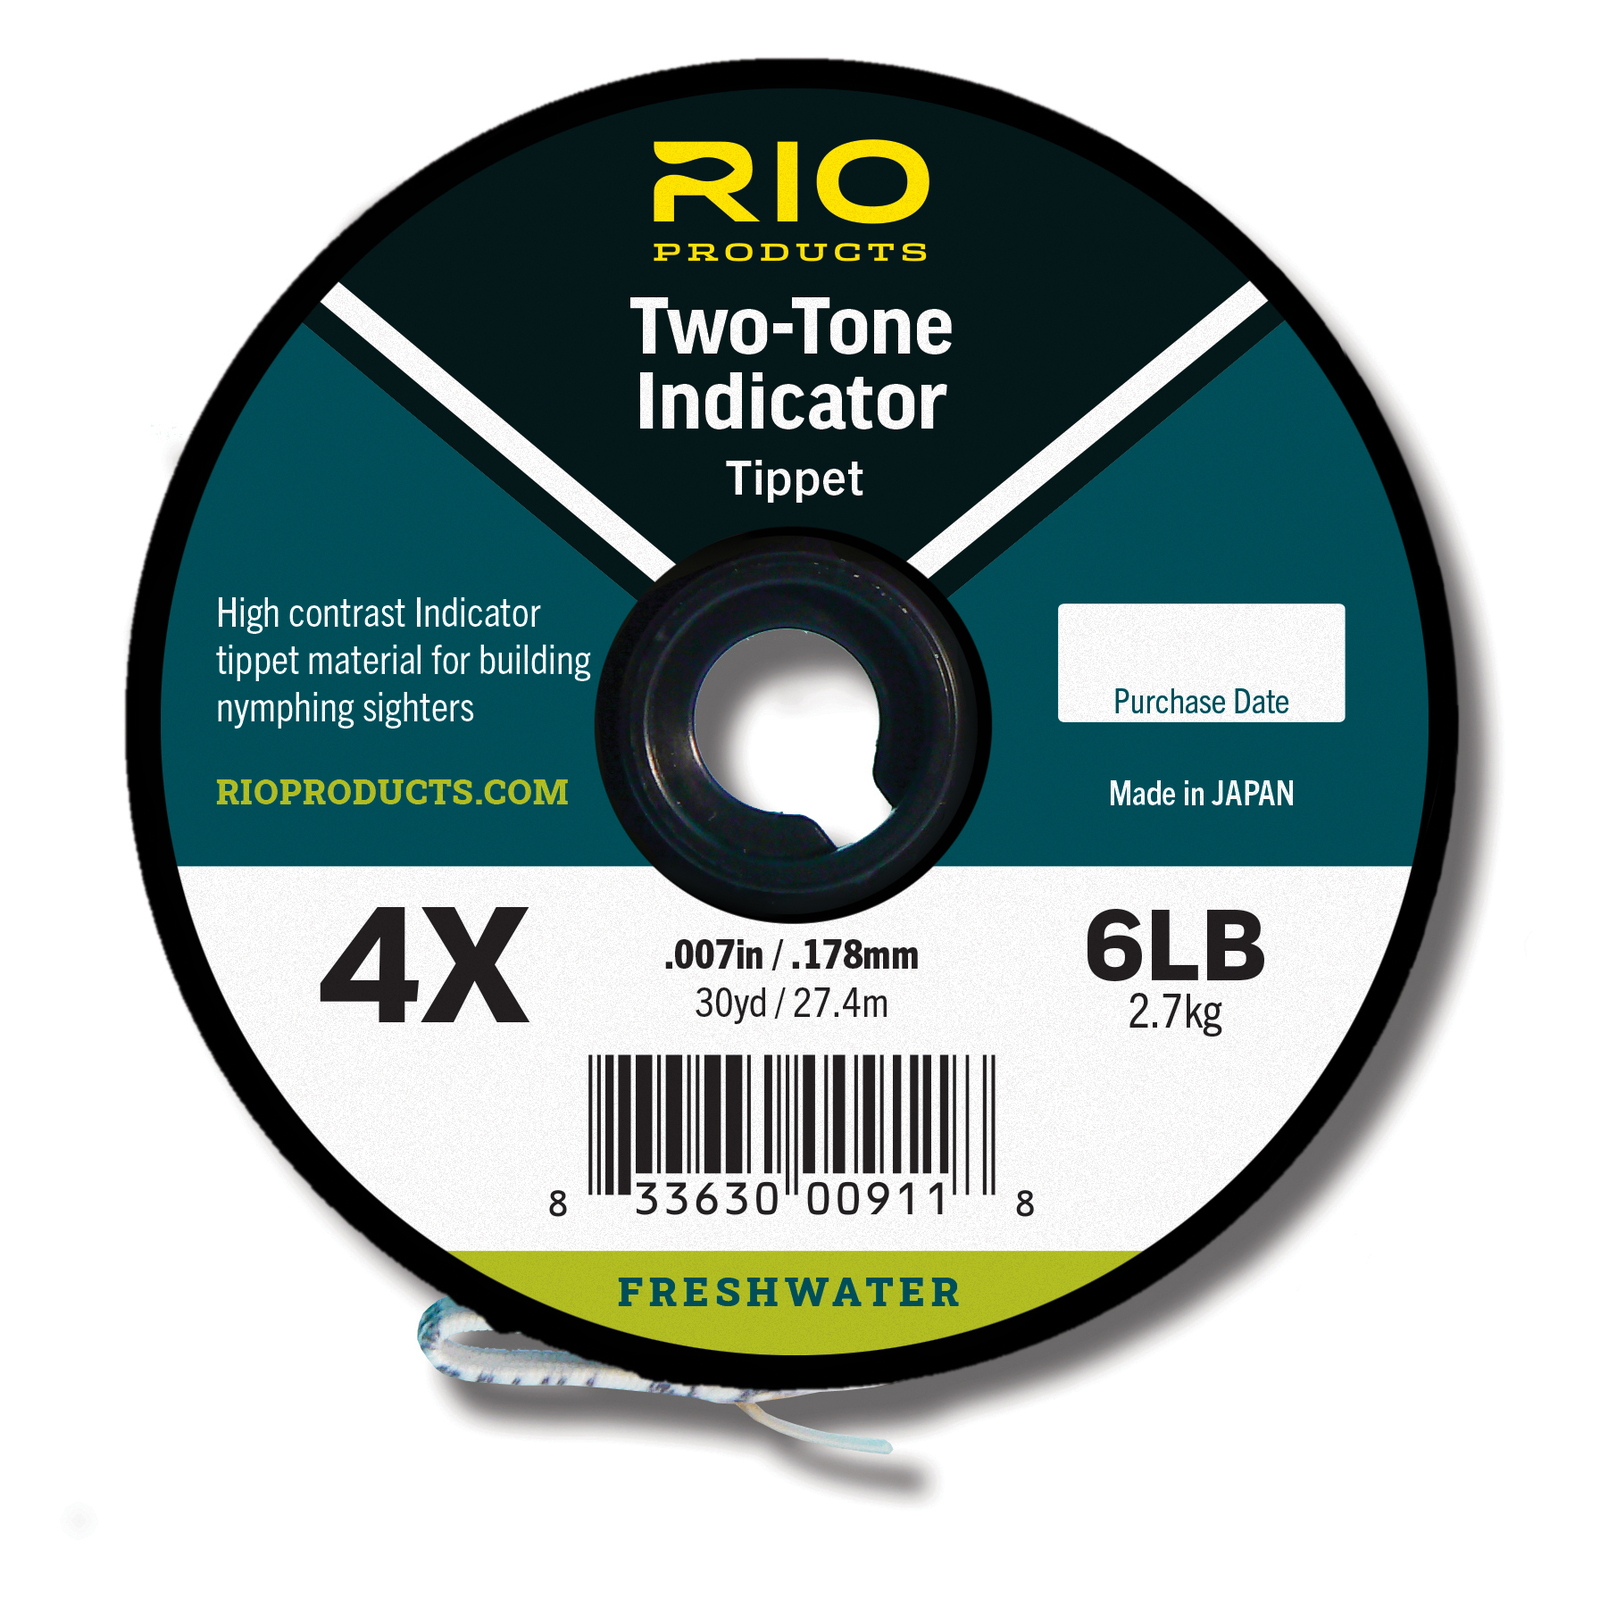 Rio Freshwater 2-Tone Indicator Tippet · 1x · 90 ft